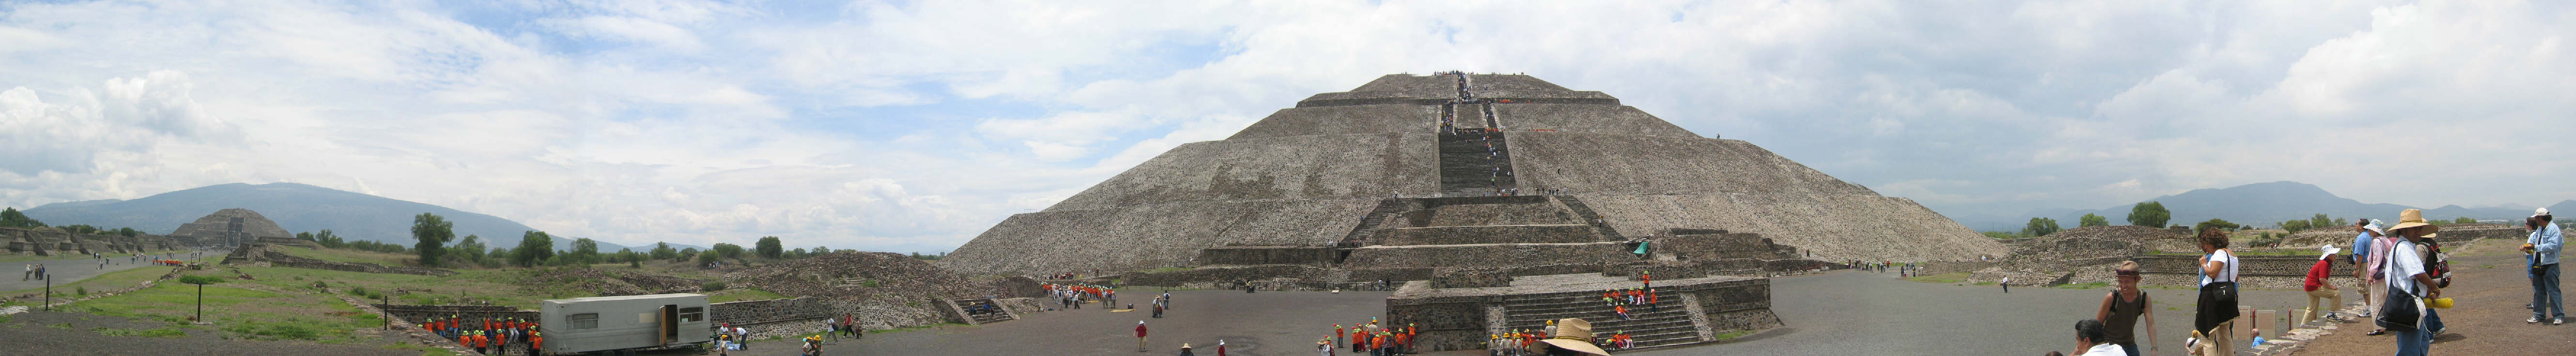 Teotihuacan (Mexico, 2005): Piramide del Sol